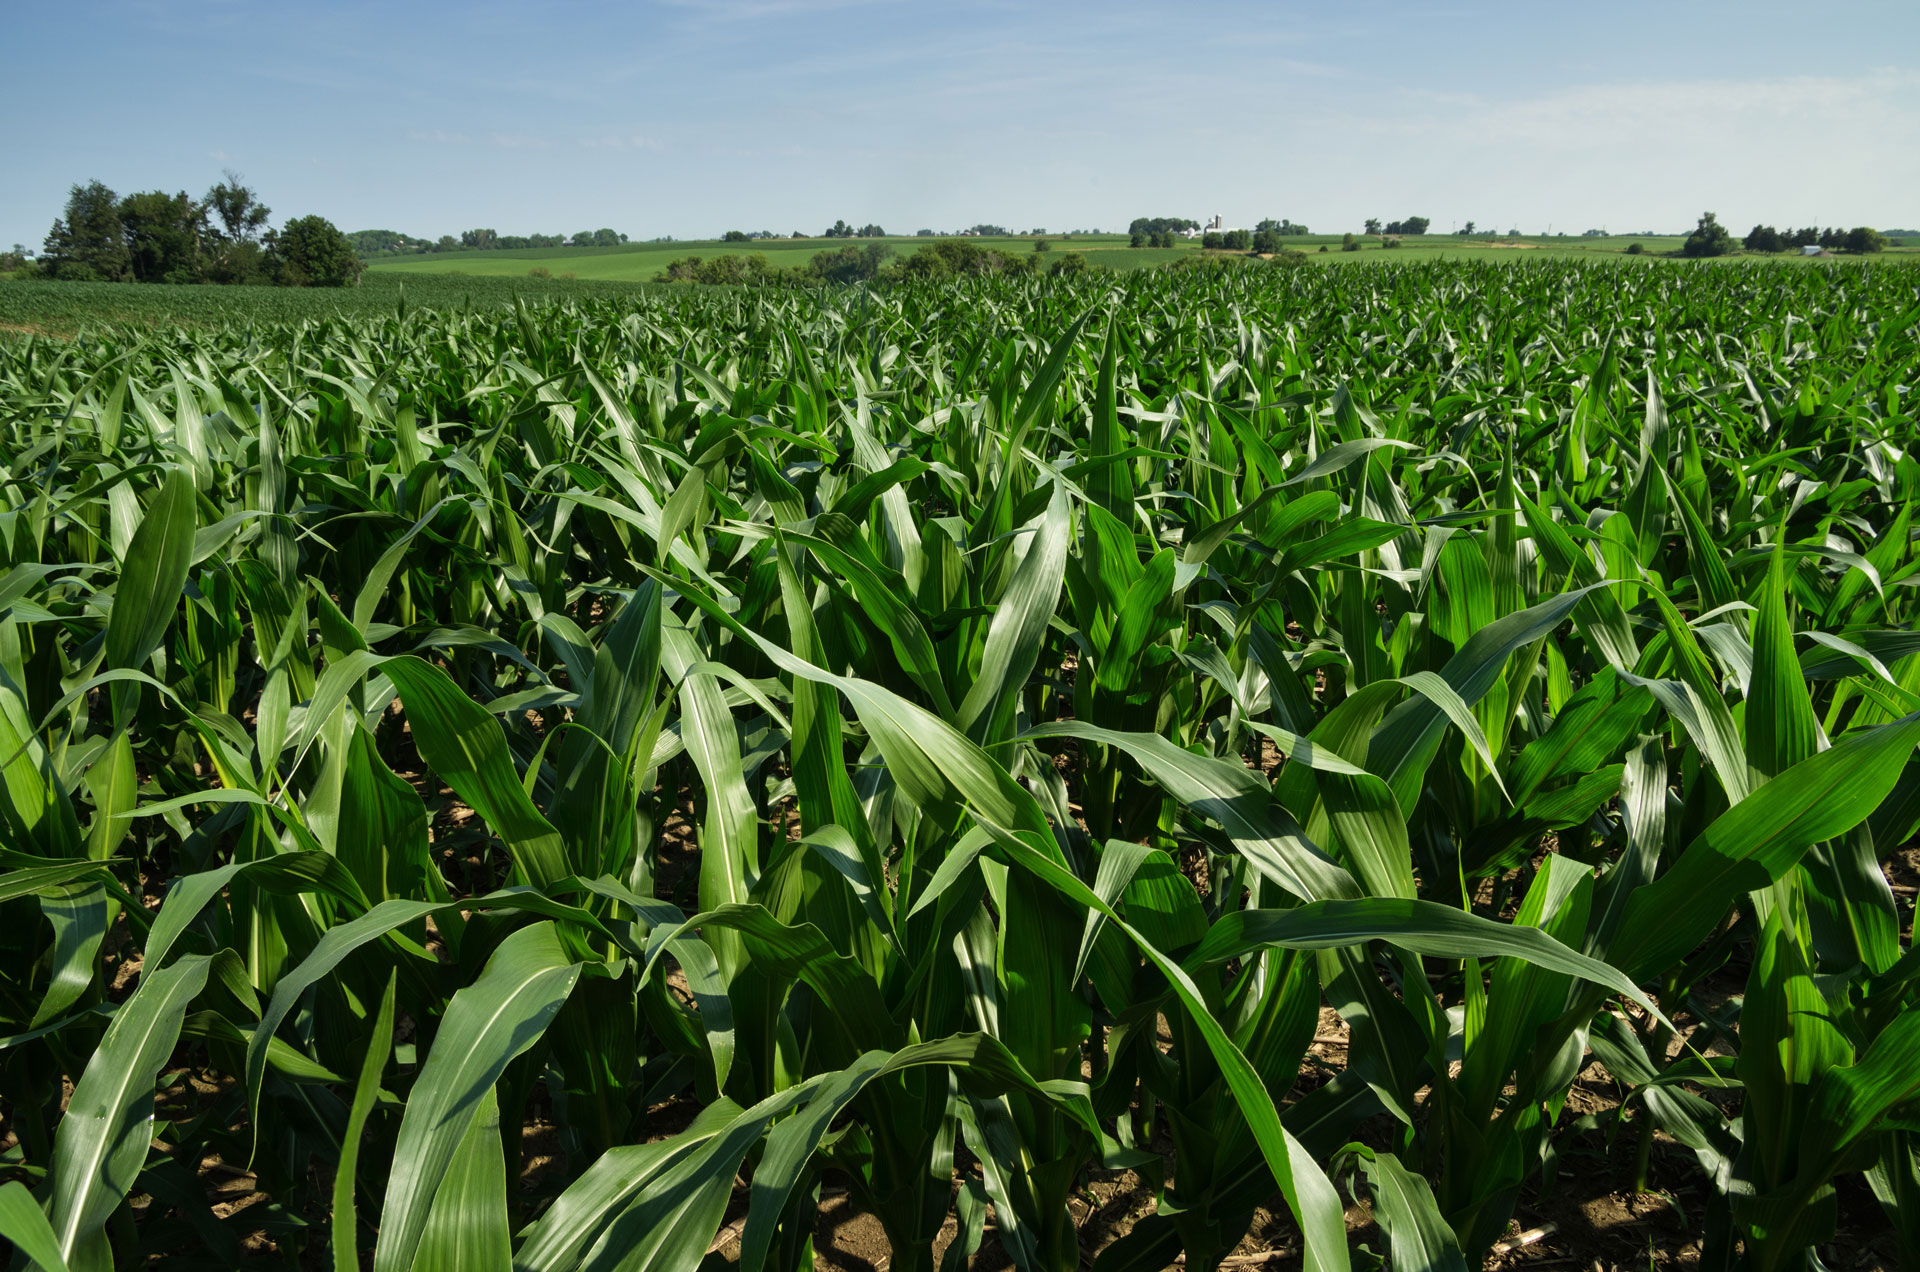 Iowa cornfield